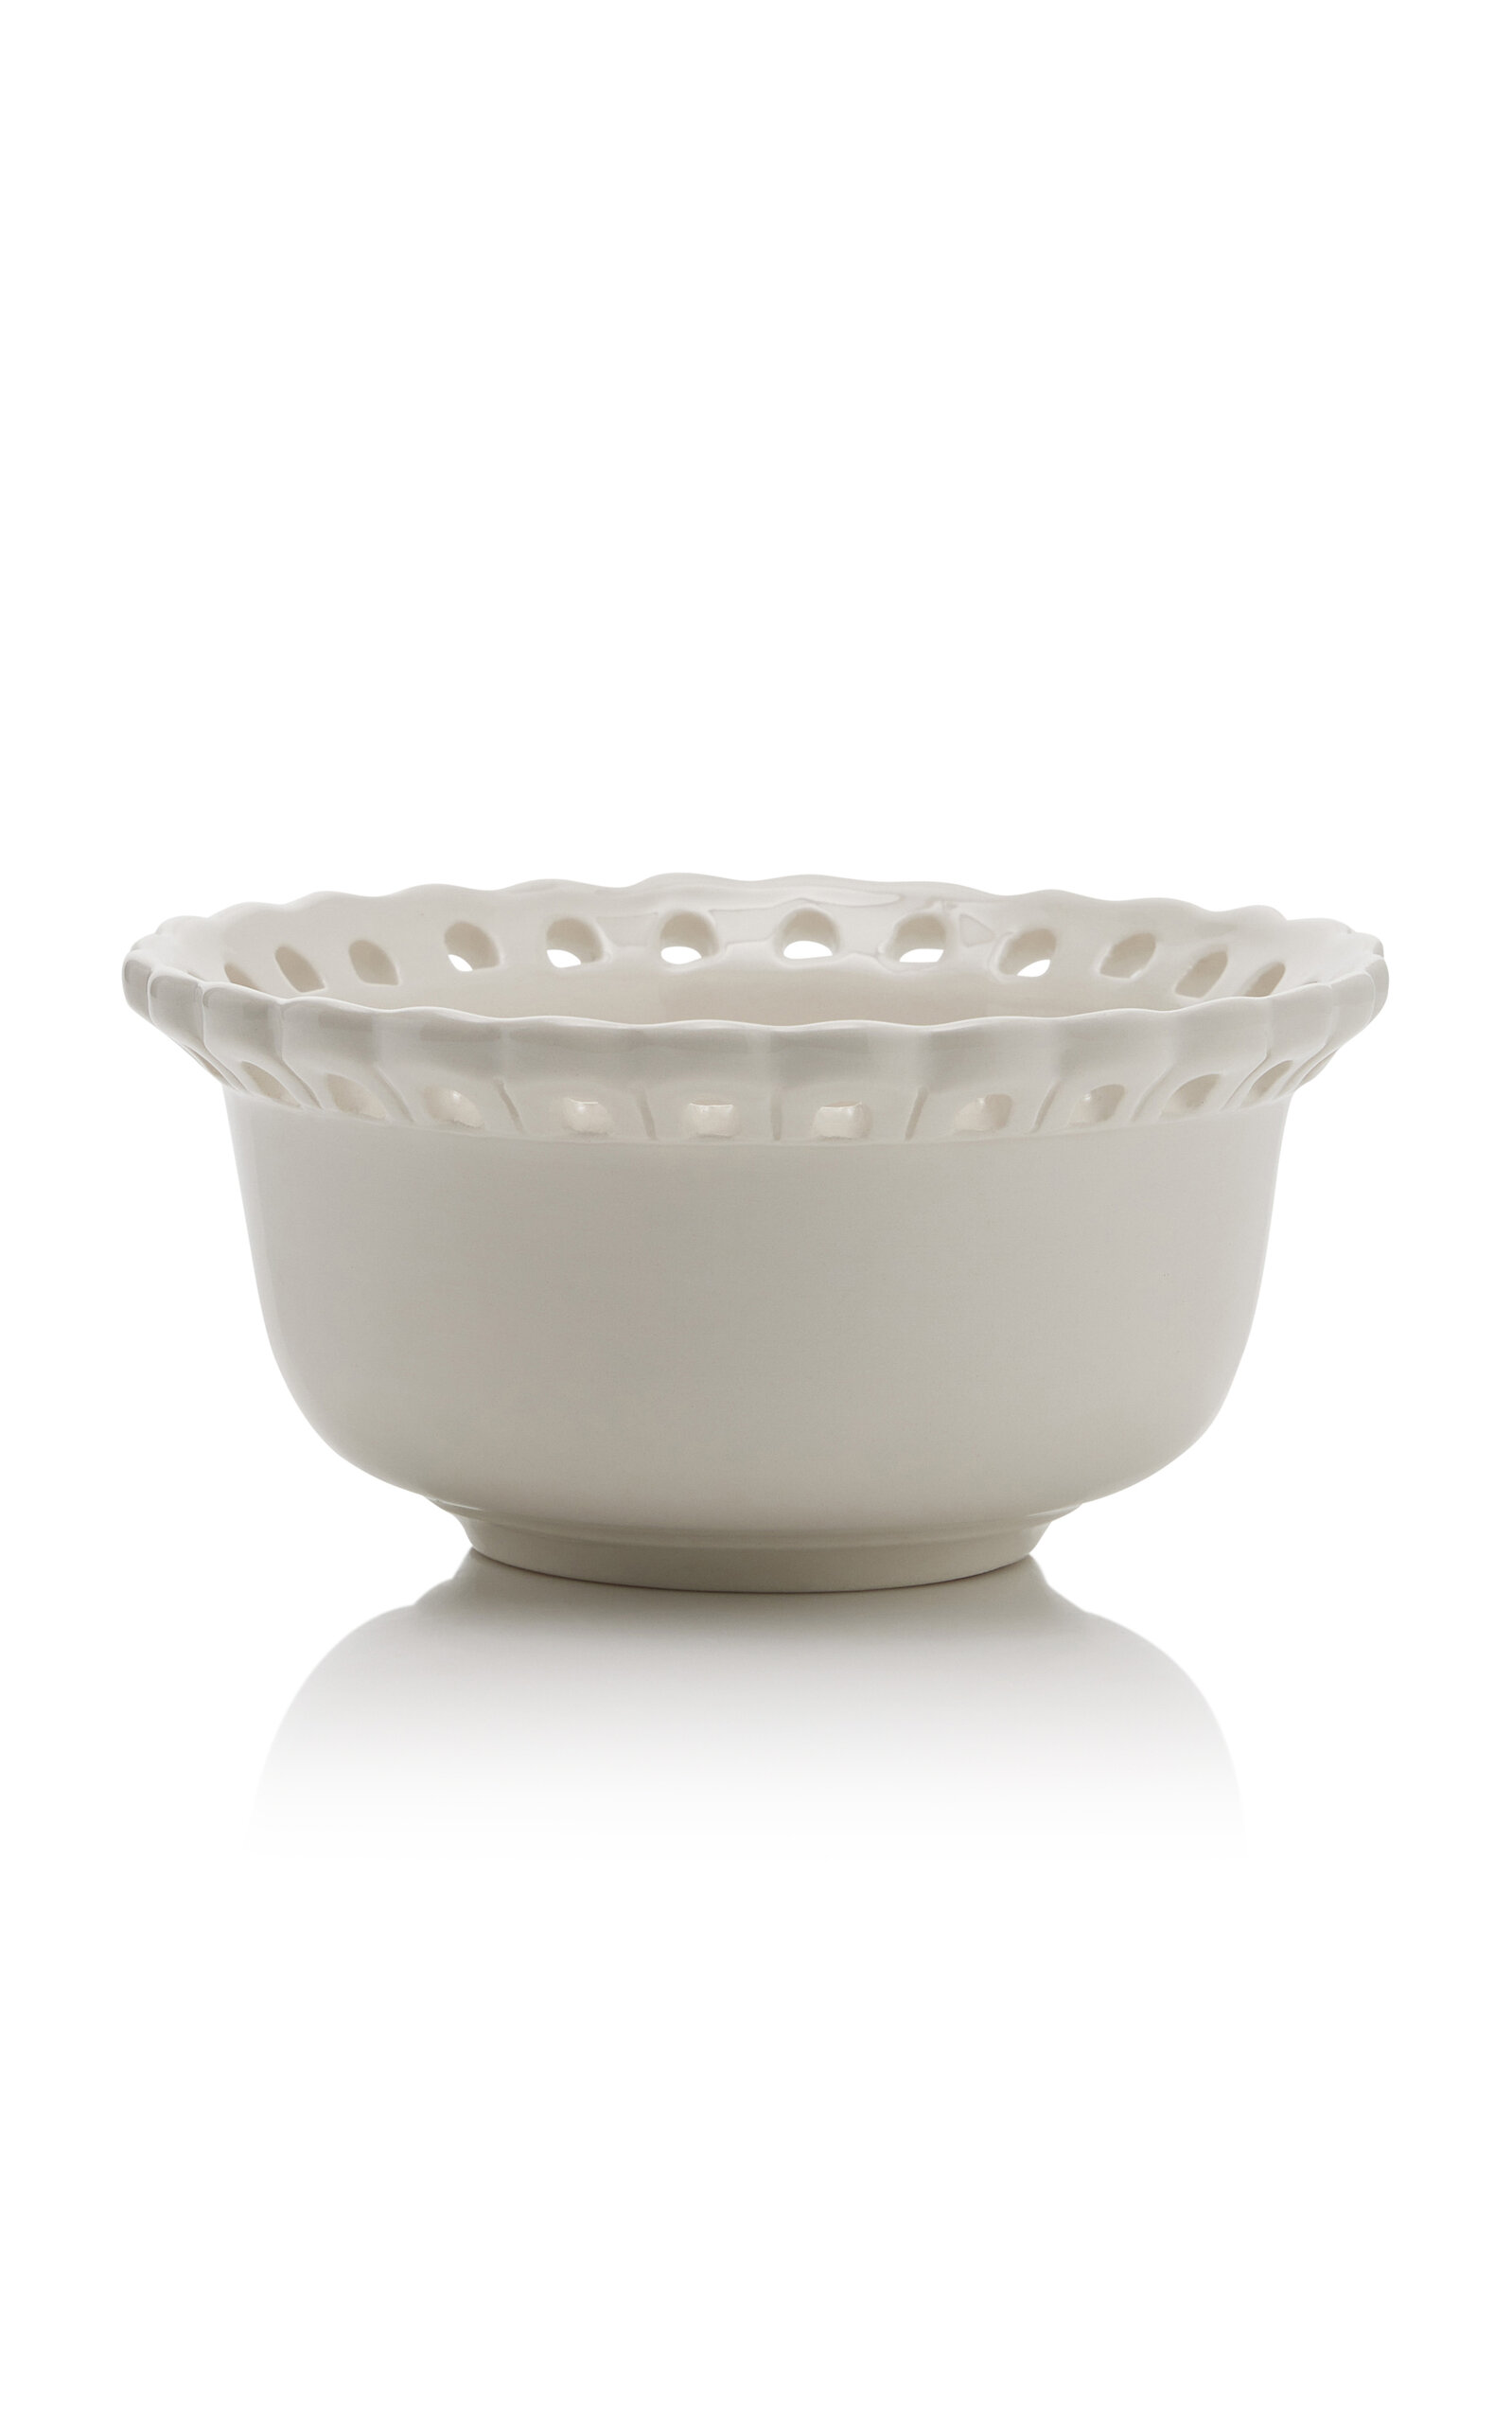 Moda Domus Balconata Creamware Consommé Bowl In White